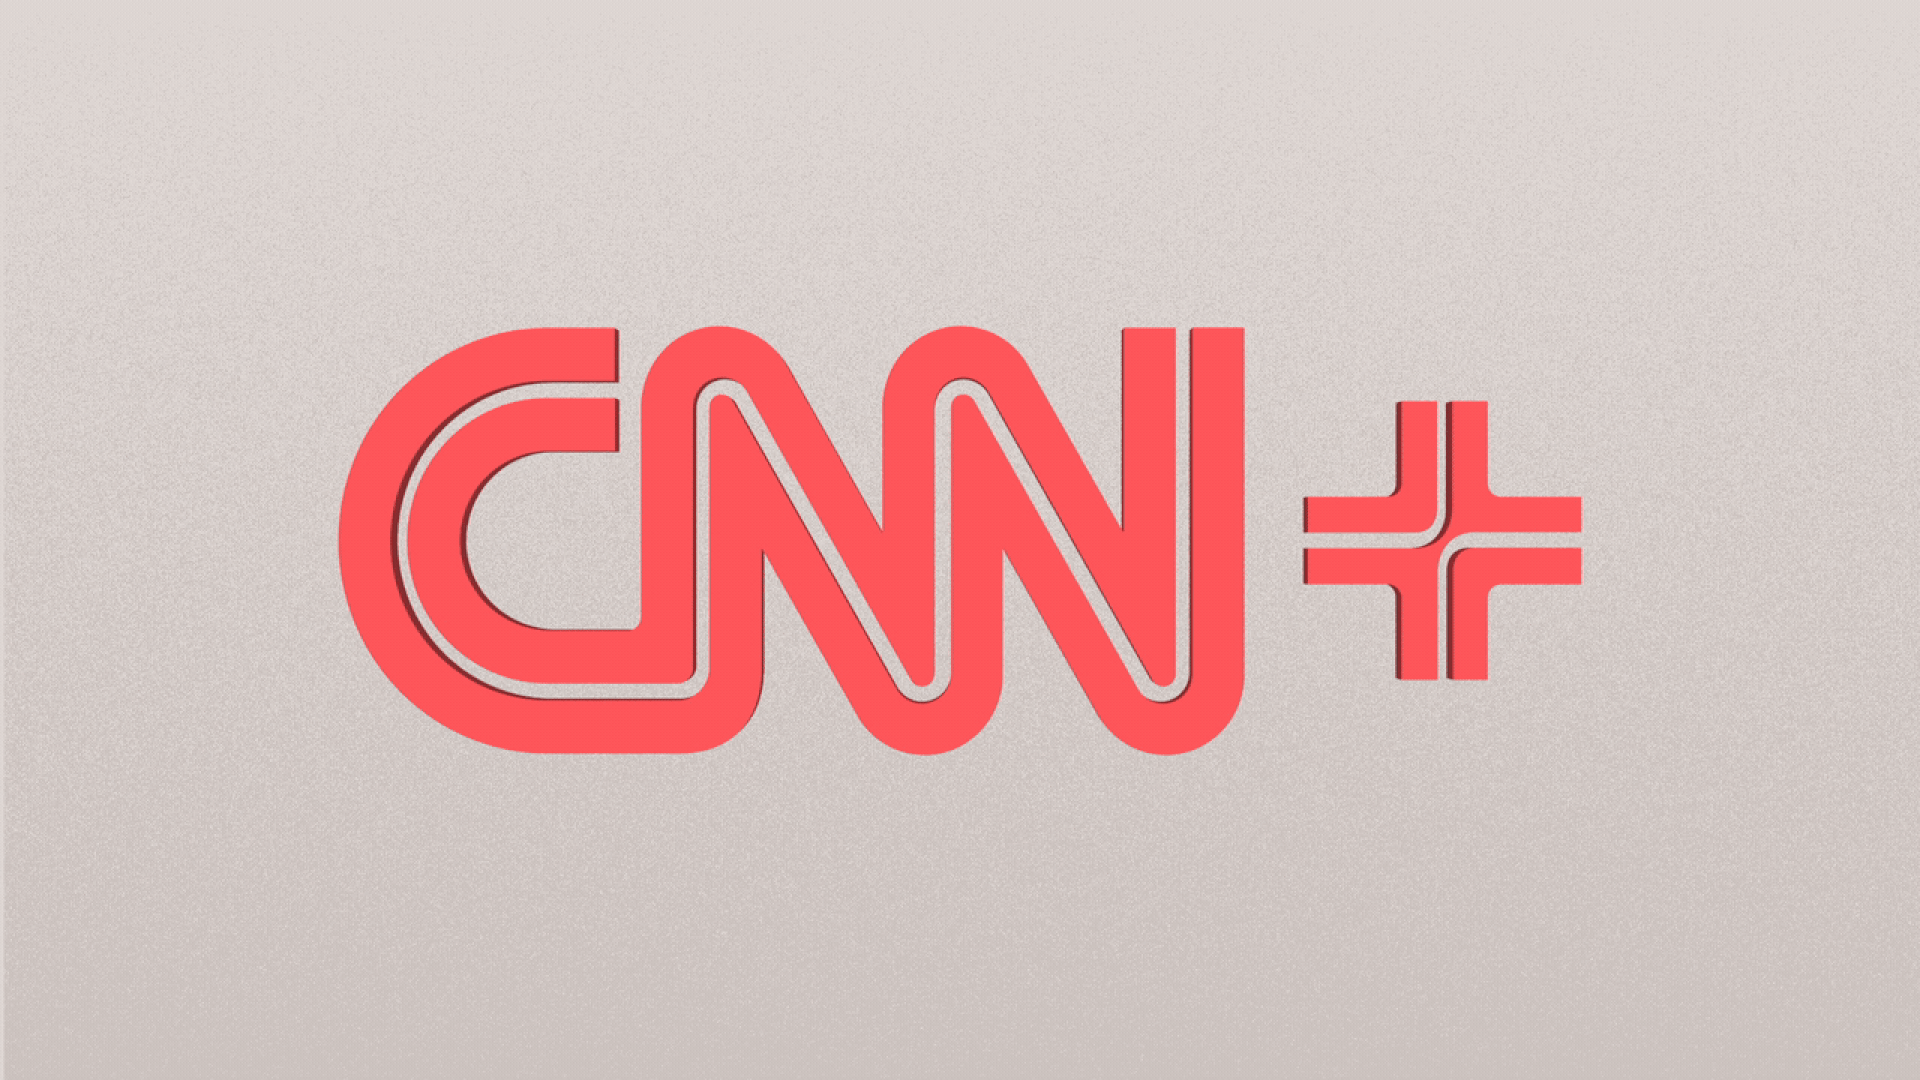 CNN+ logo animated to fall down